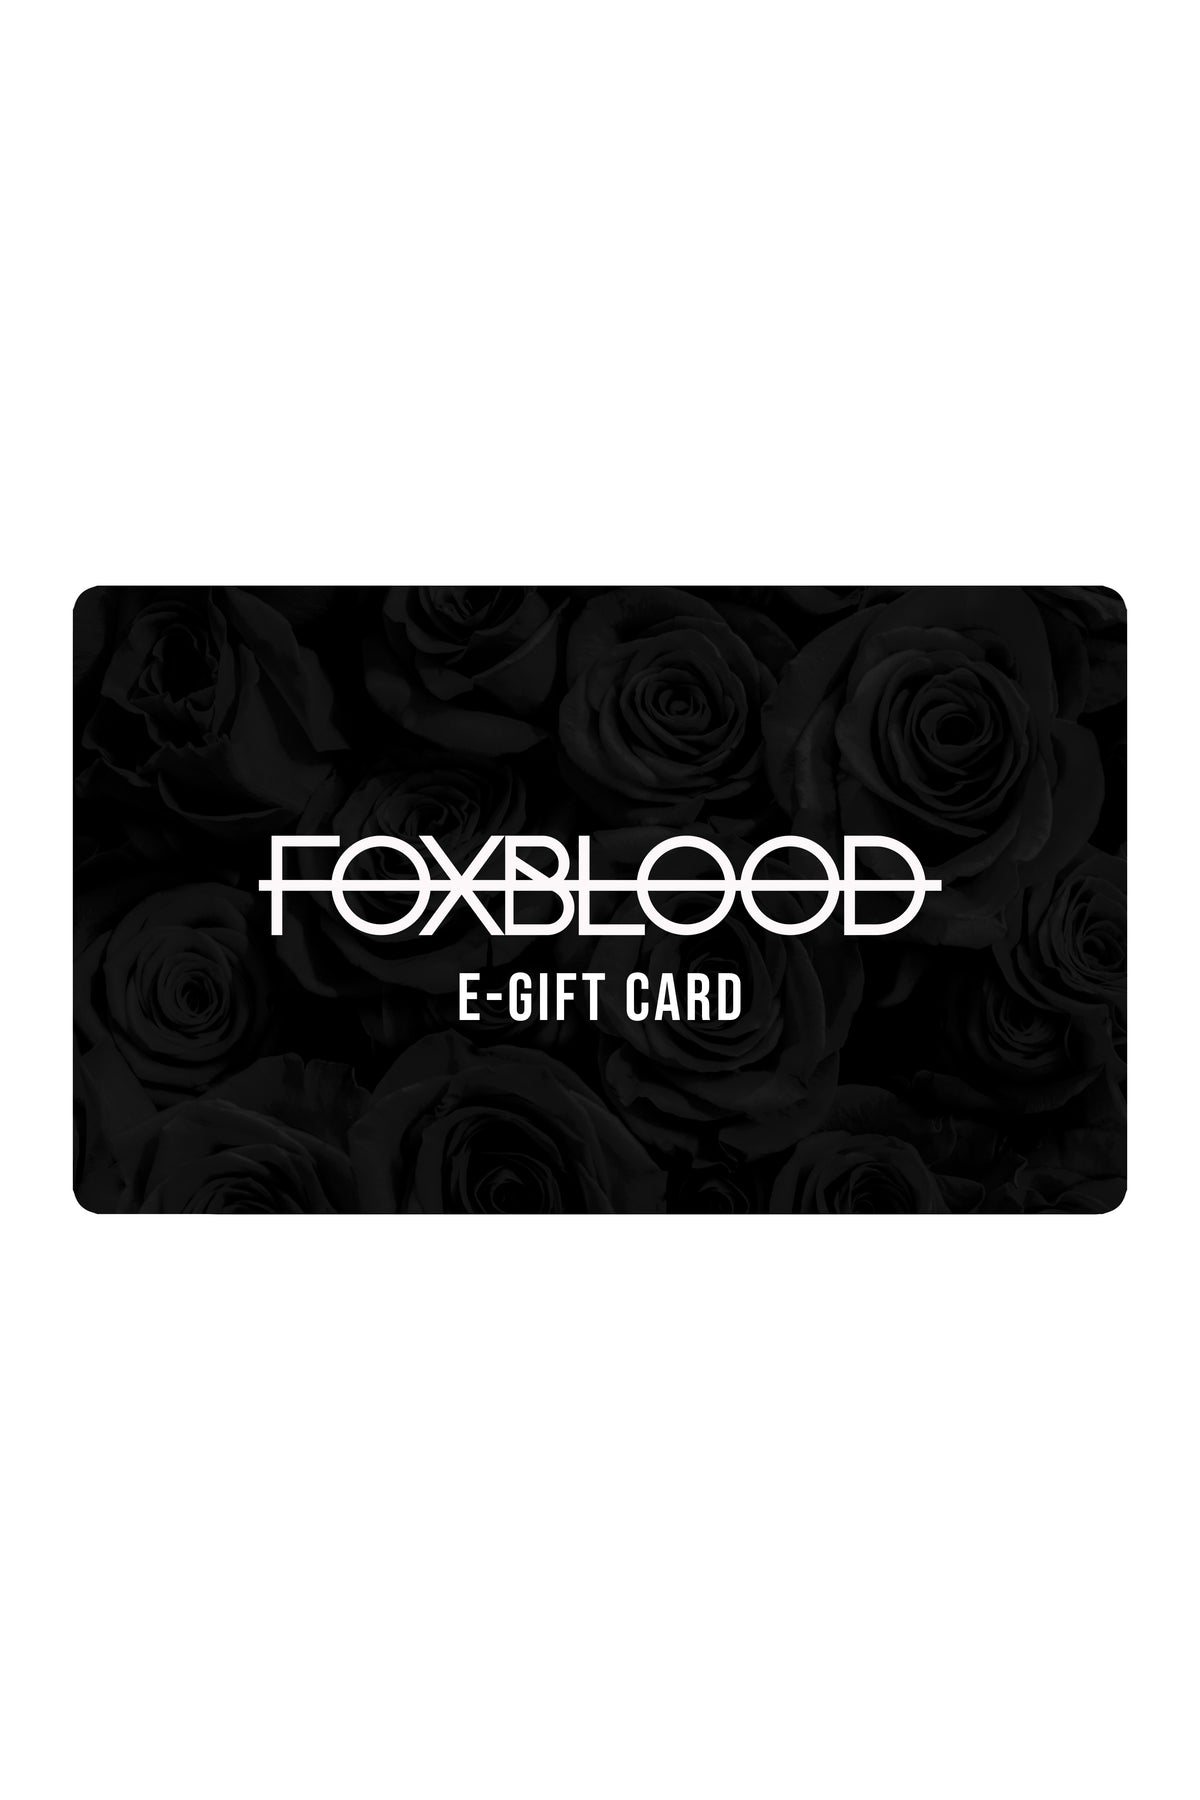 FOXBLOOD E-Gift Card